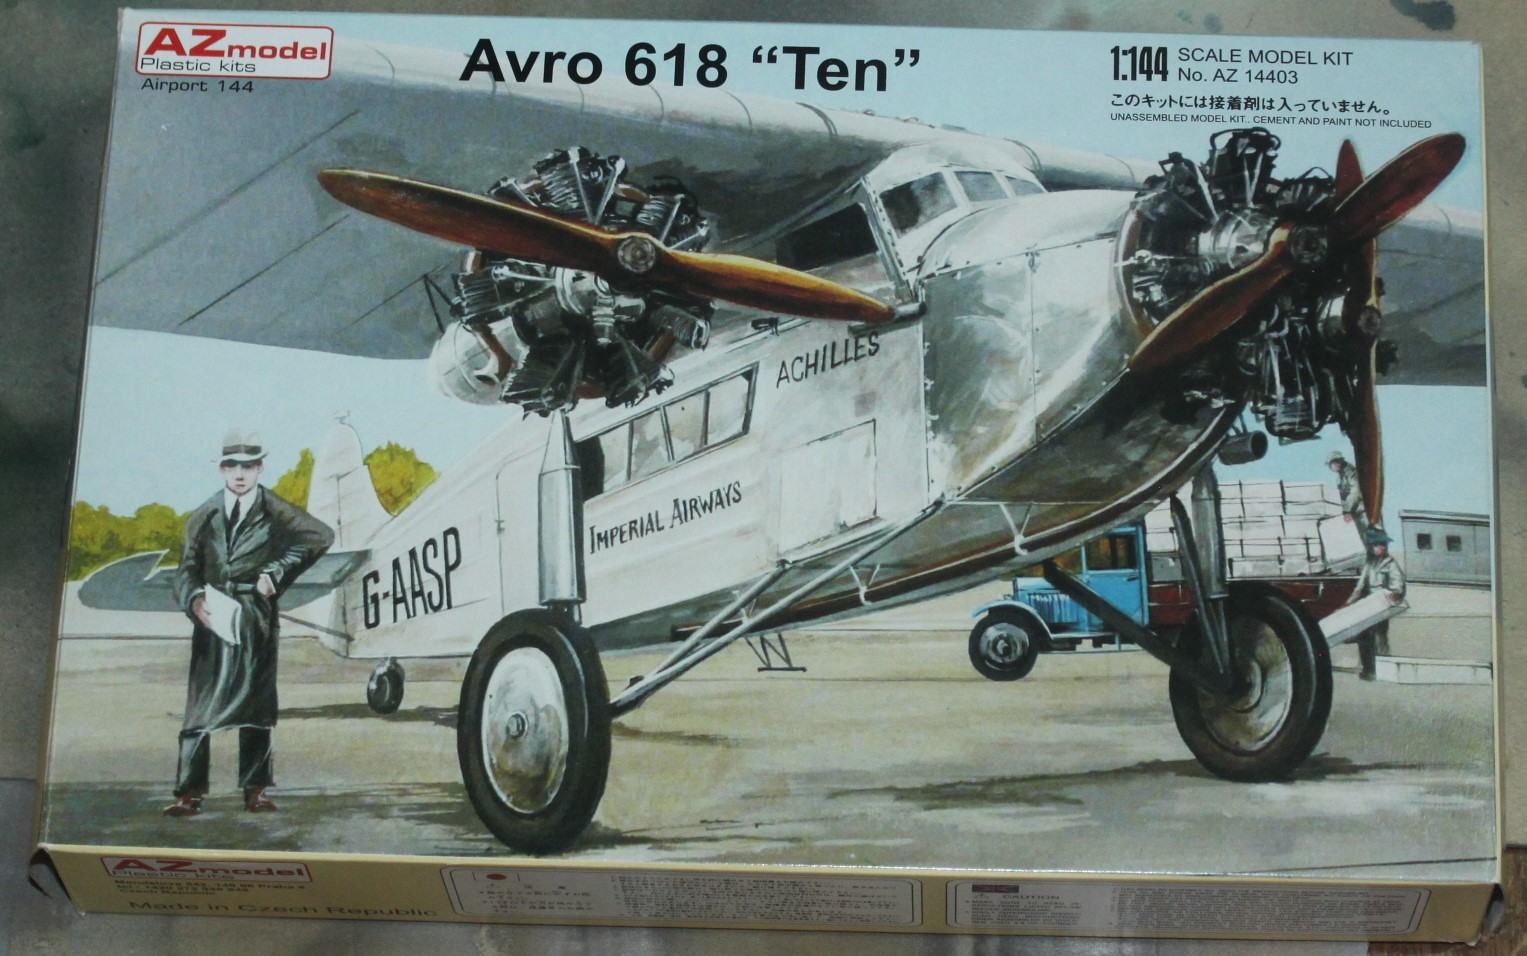 AVRO 618 "Ten", Achilles, AZ Models, 1/144 53616759108_c9f9d98a64_h